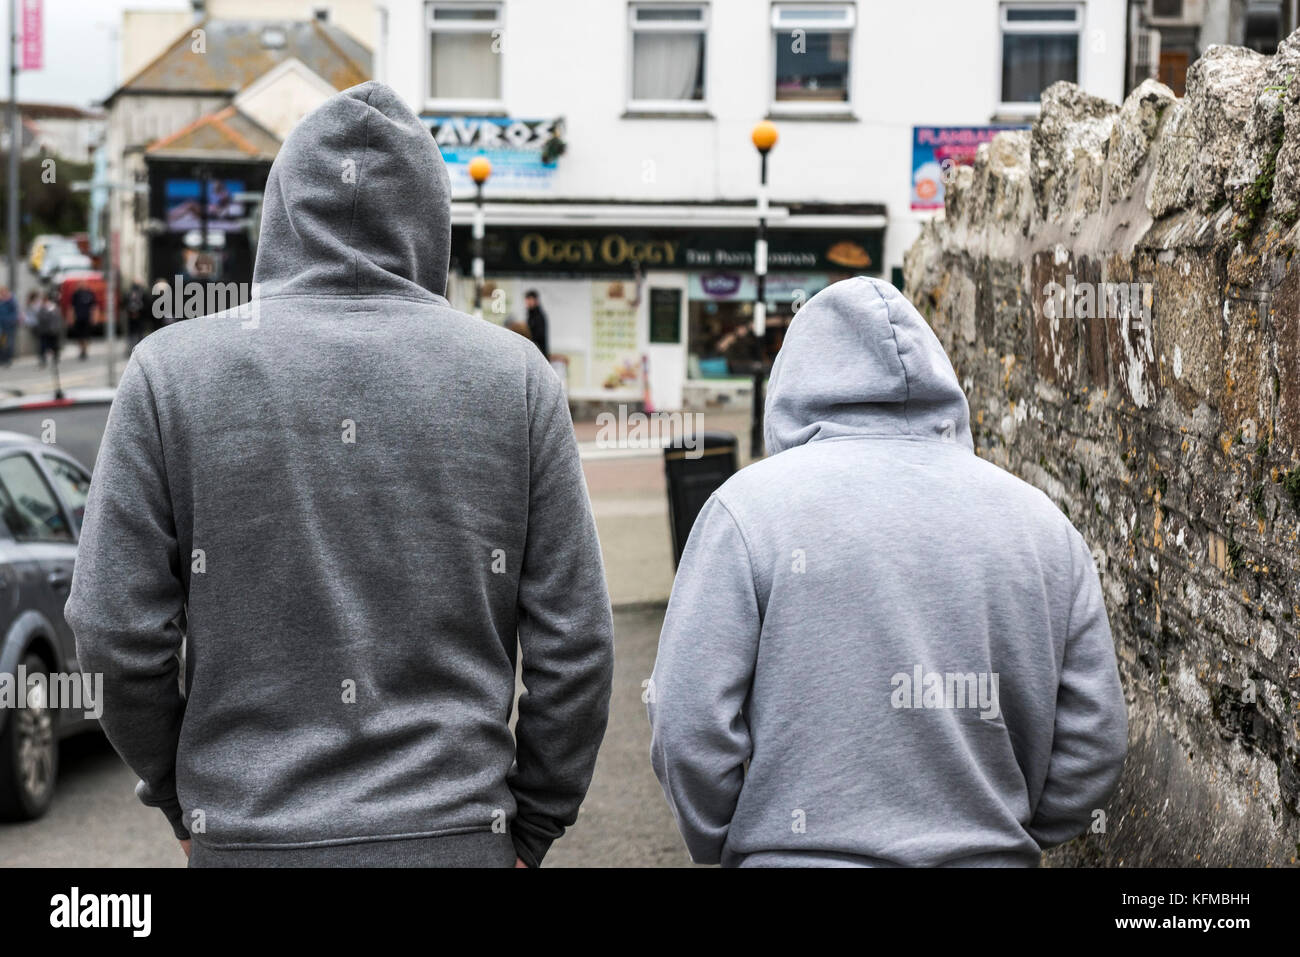 Two men wearing grey hoodies. Stock Photo